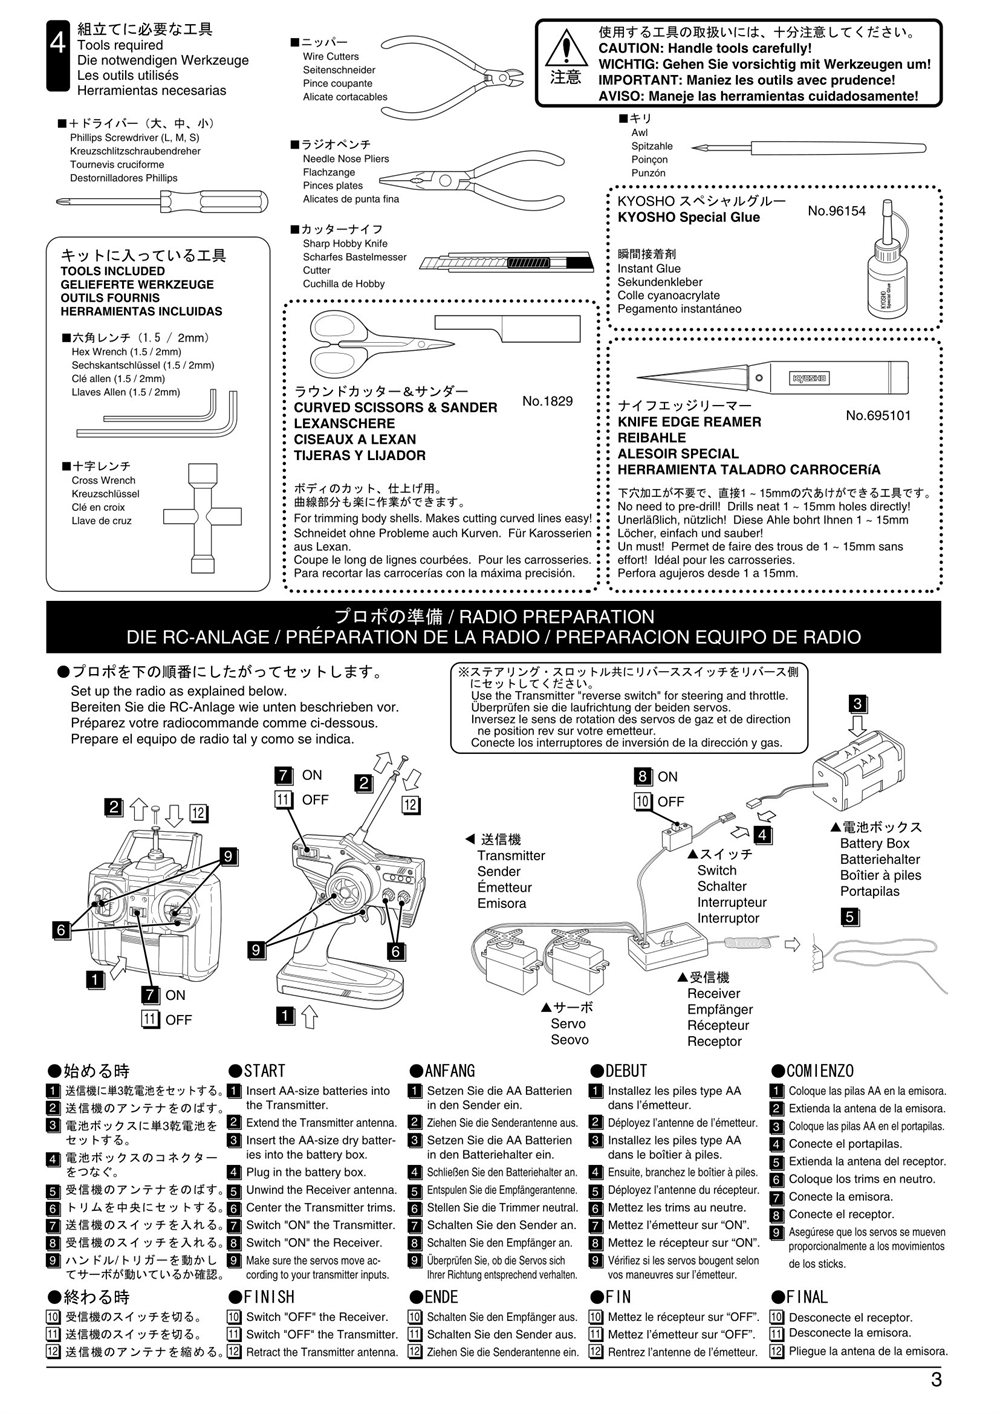 Kyosho - PureTen GP Alpha 3 - Manual - Page 3